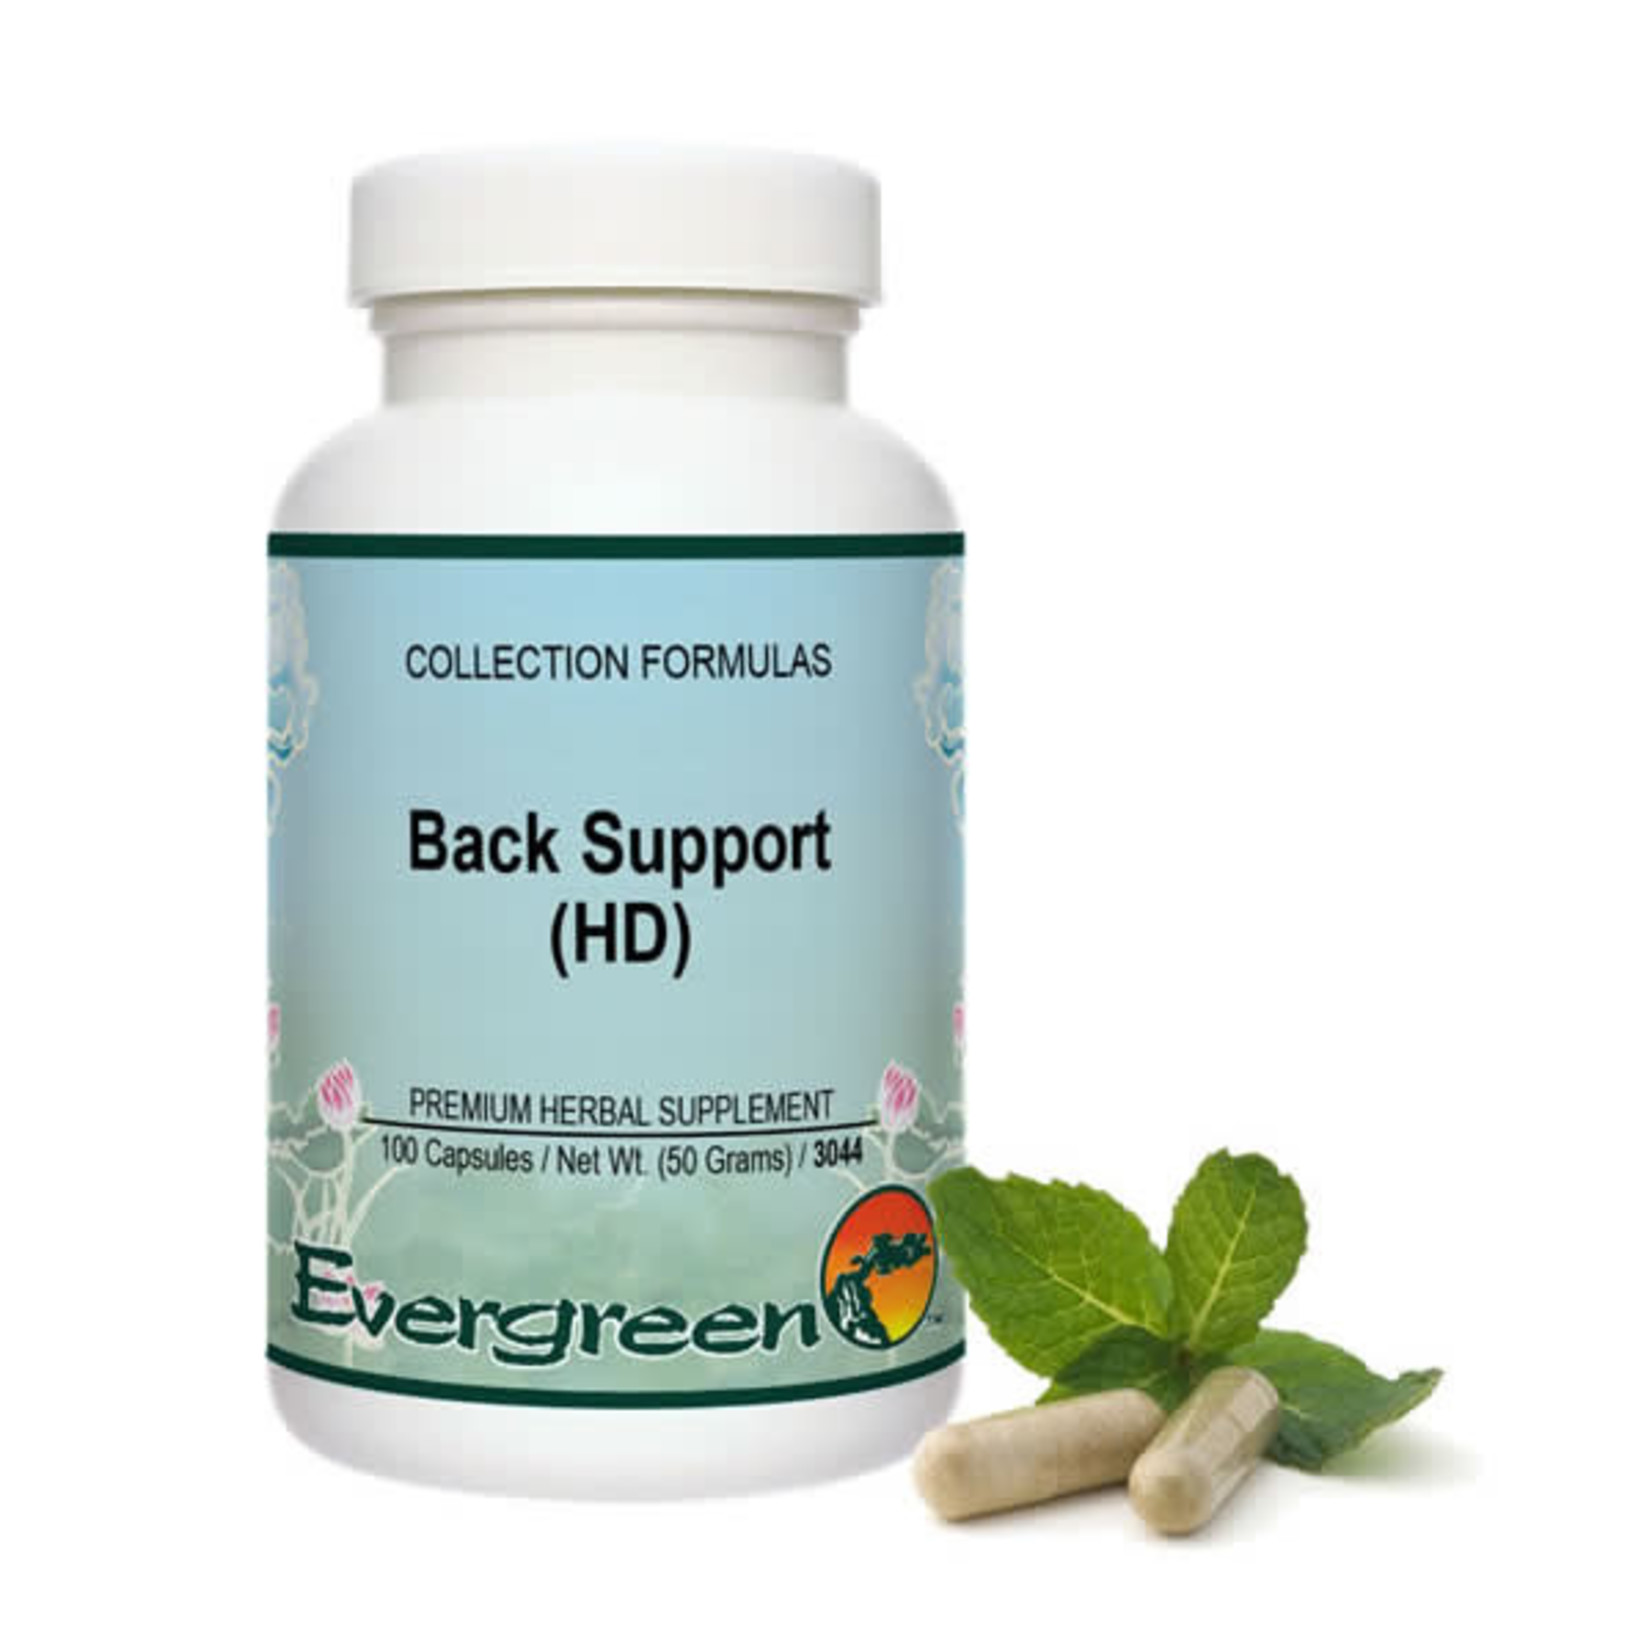 Back Support (HD) (Evergreen Herbs)